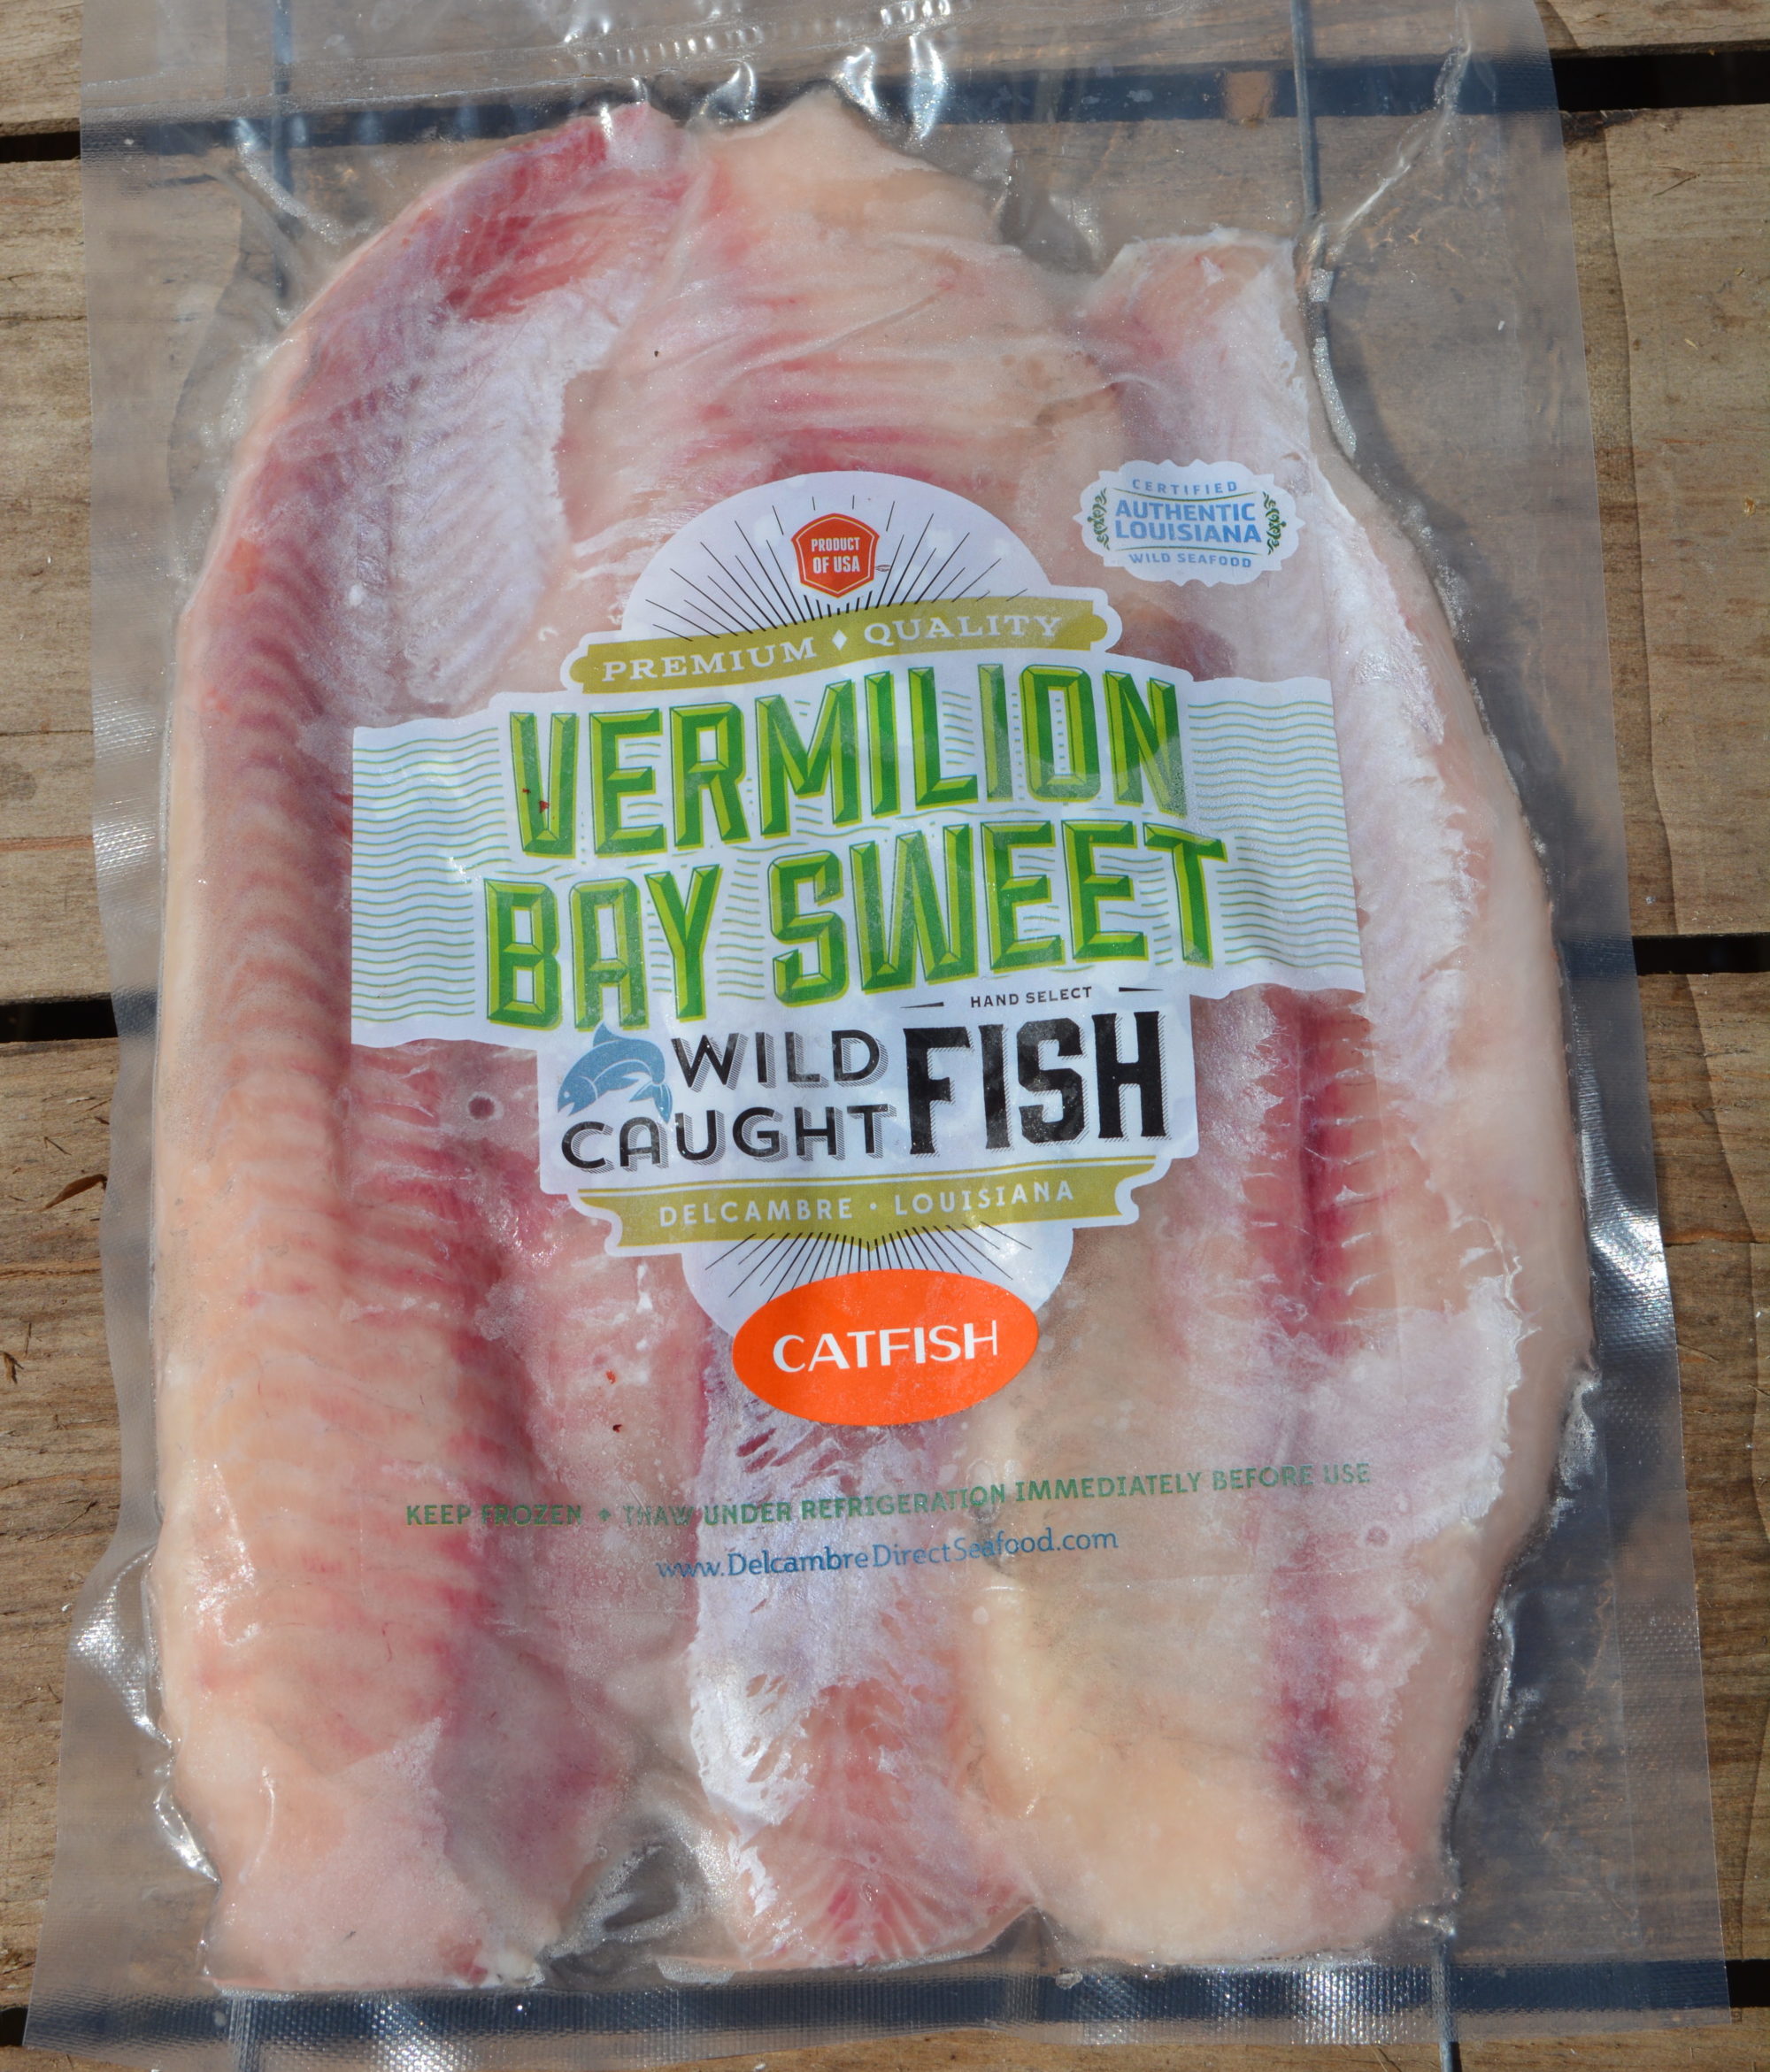 Vermilion Bay Sweet Brand catfish pack